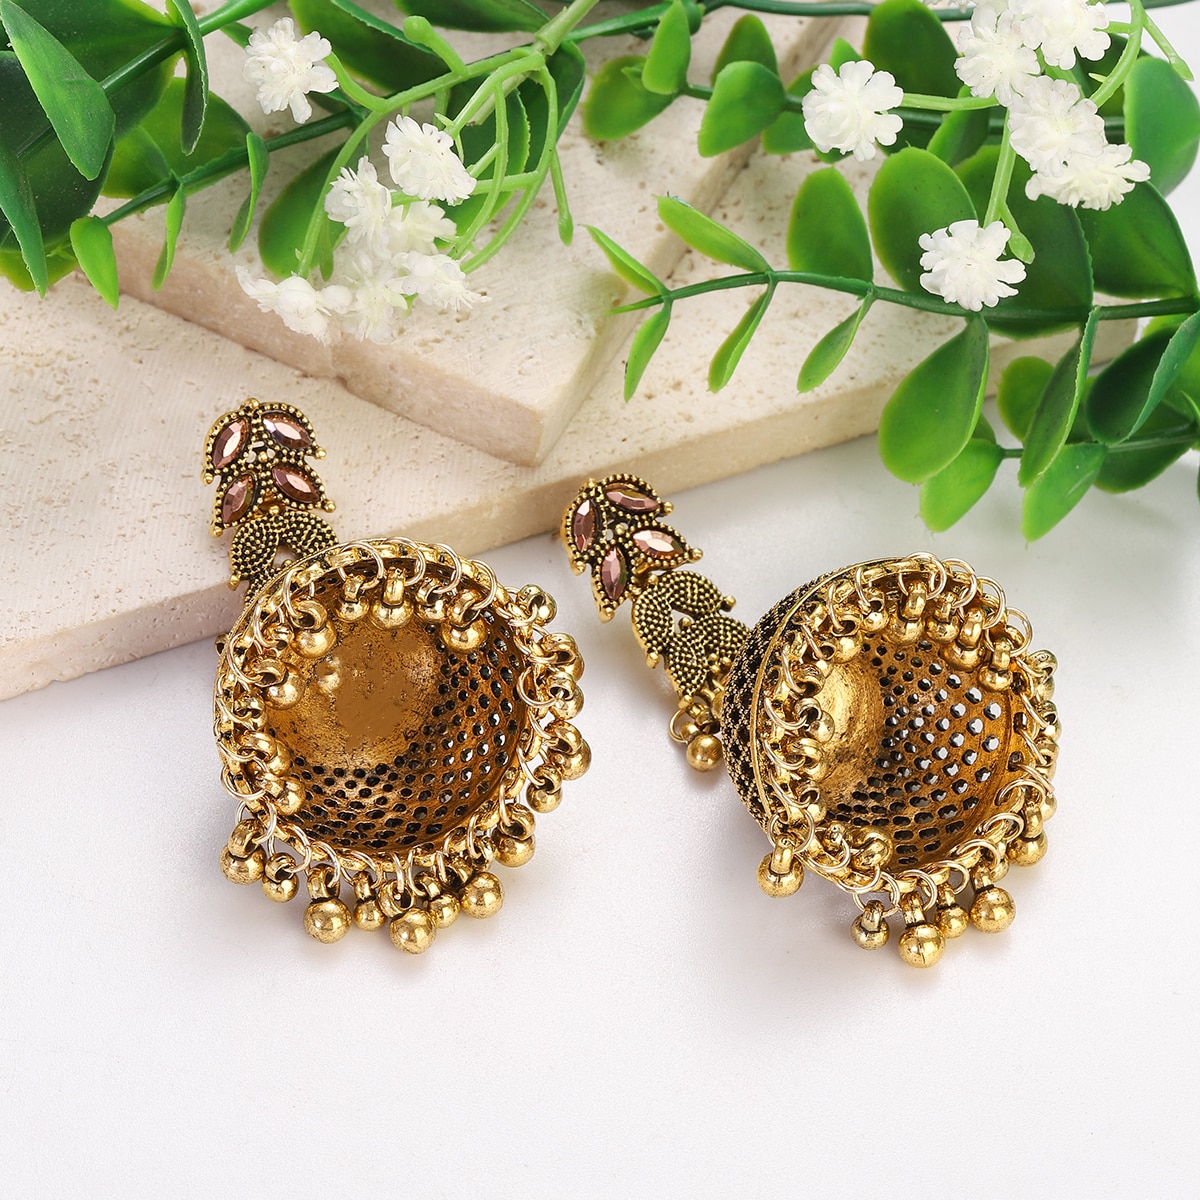 Ethnic-Big-Gold-Color-Indian-Jhumka-Earrings-For-Women-Pendient-Retro-Bells-Tibetan-Earrings-Oorbell-1005004736828927-3